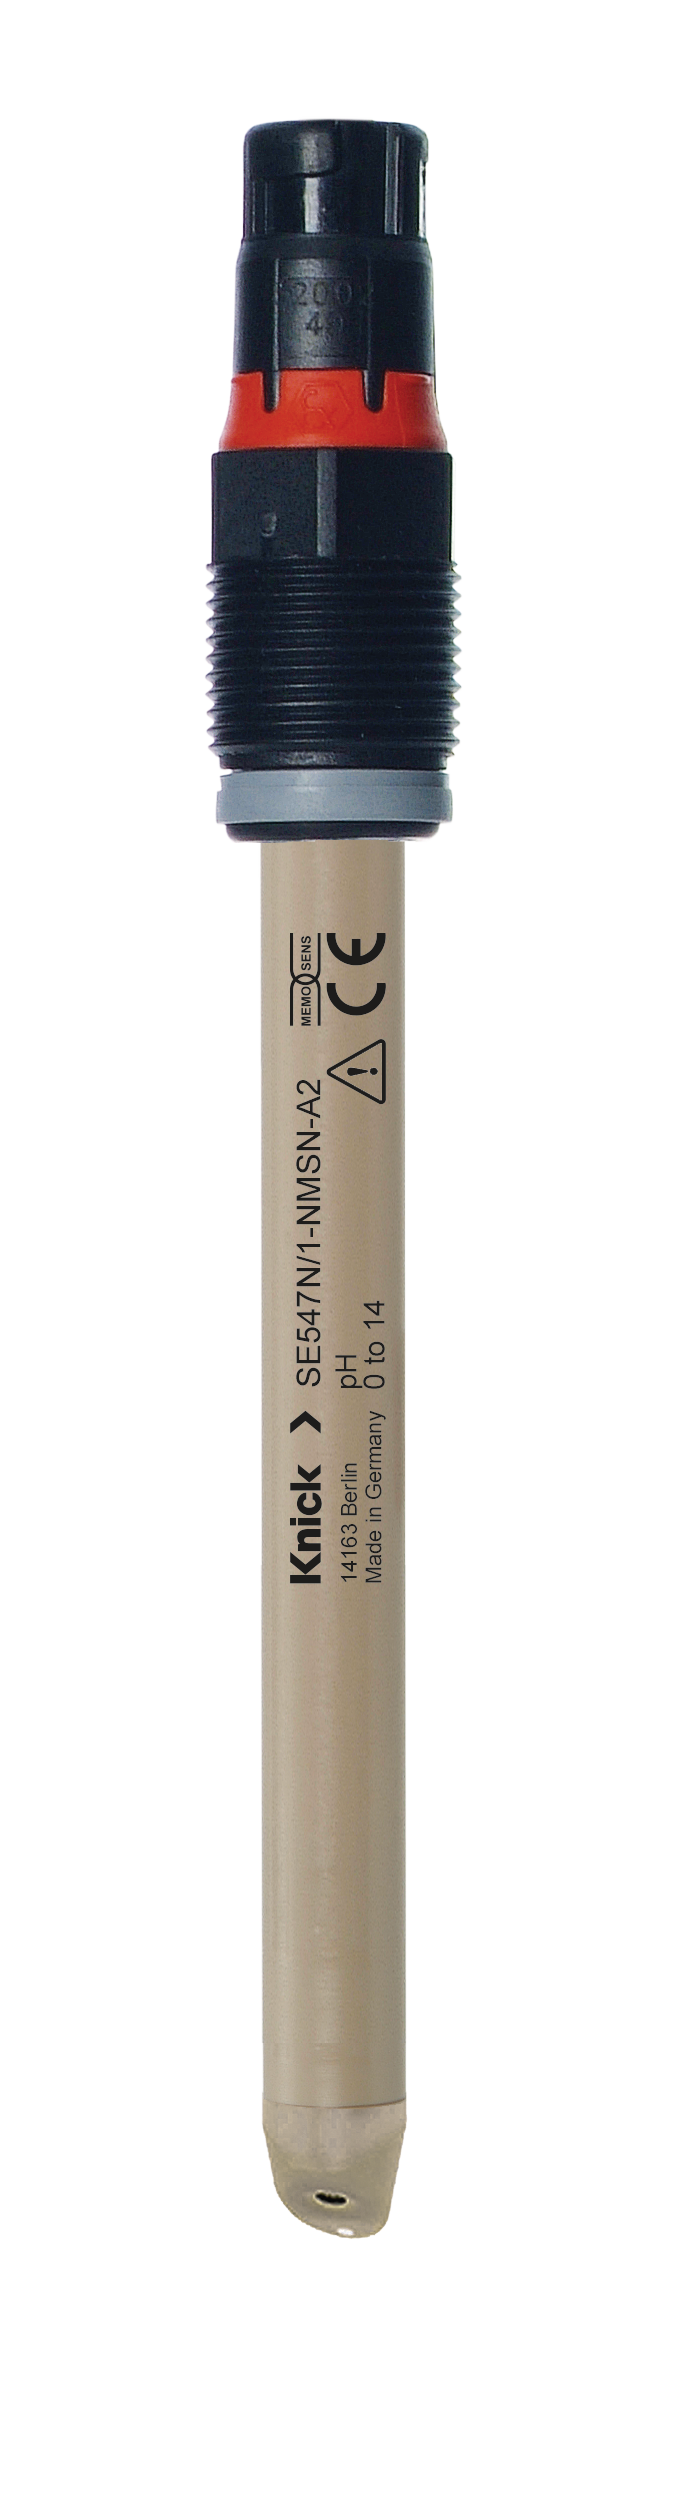 SE547N pH-Sensor | Memosens | 225 mm | CIP-/SIP-fähig und autoklavierbar